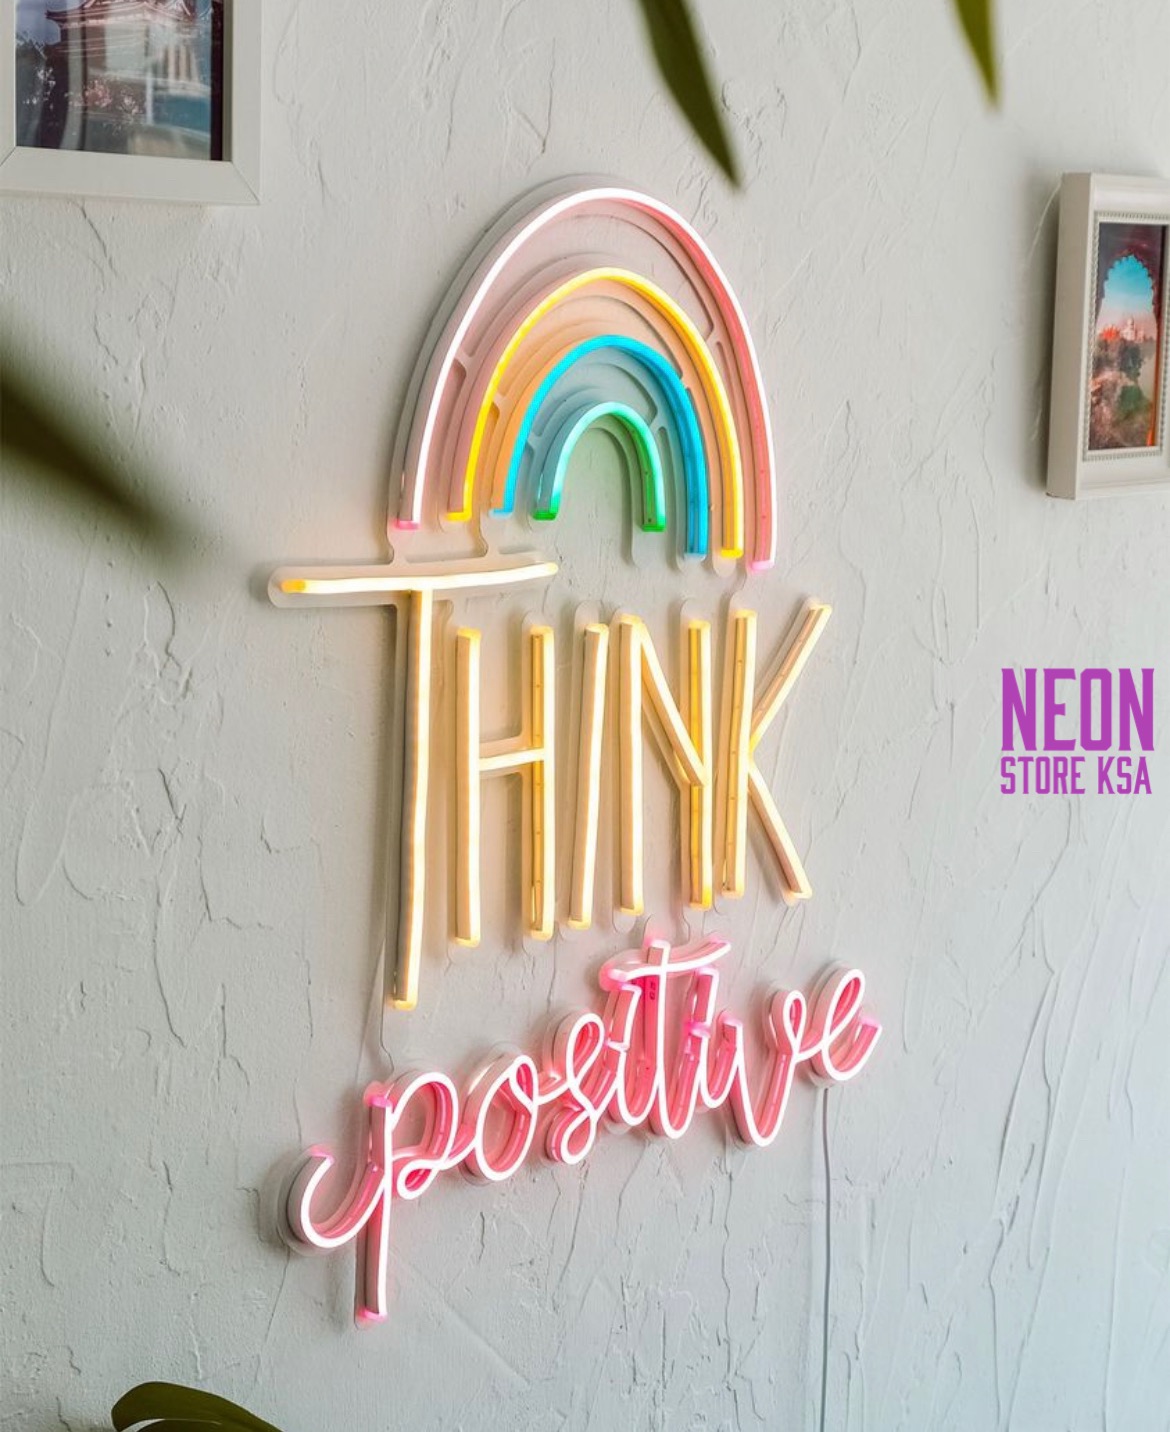 Think Positive - Neon Art